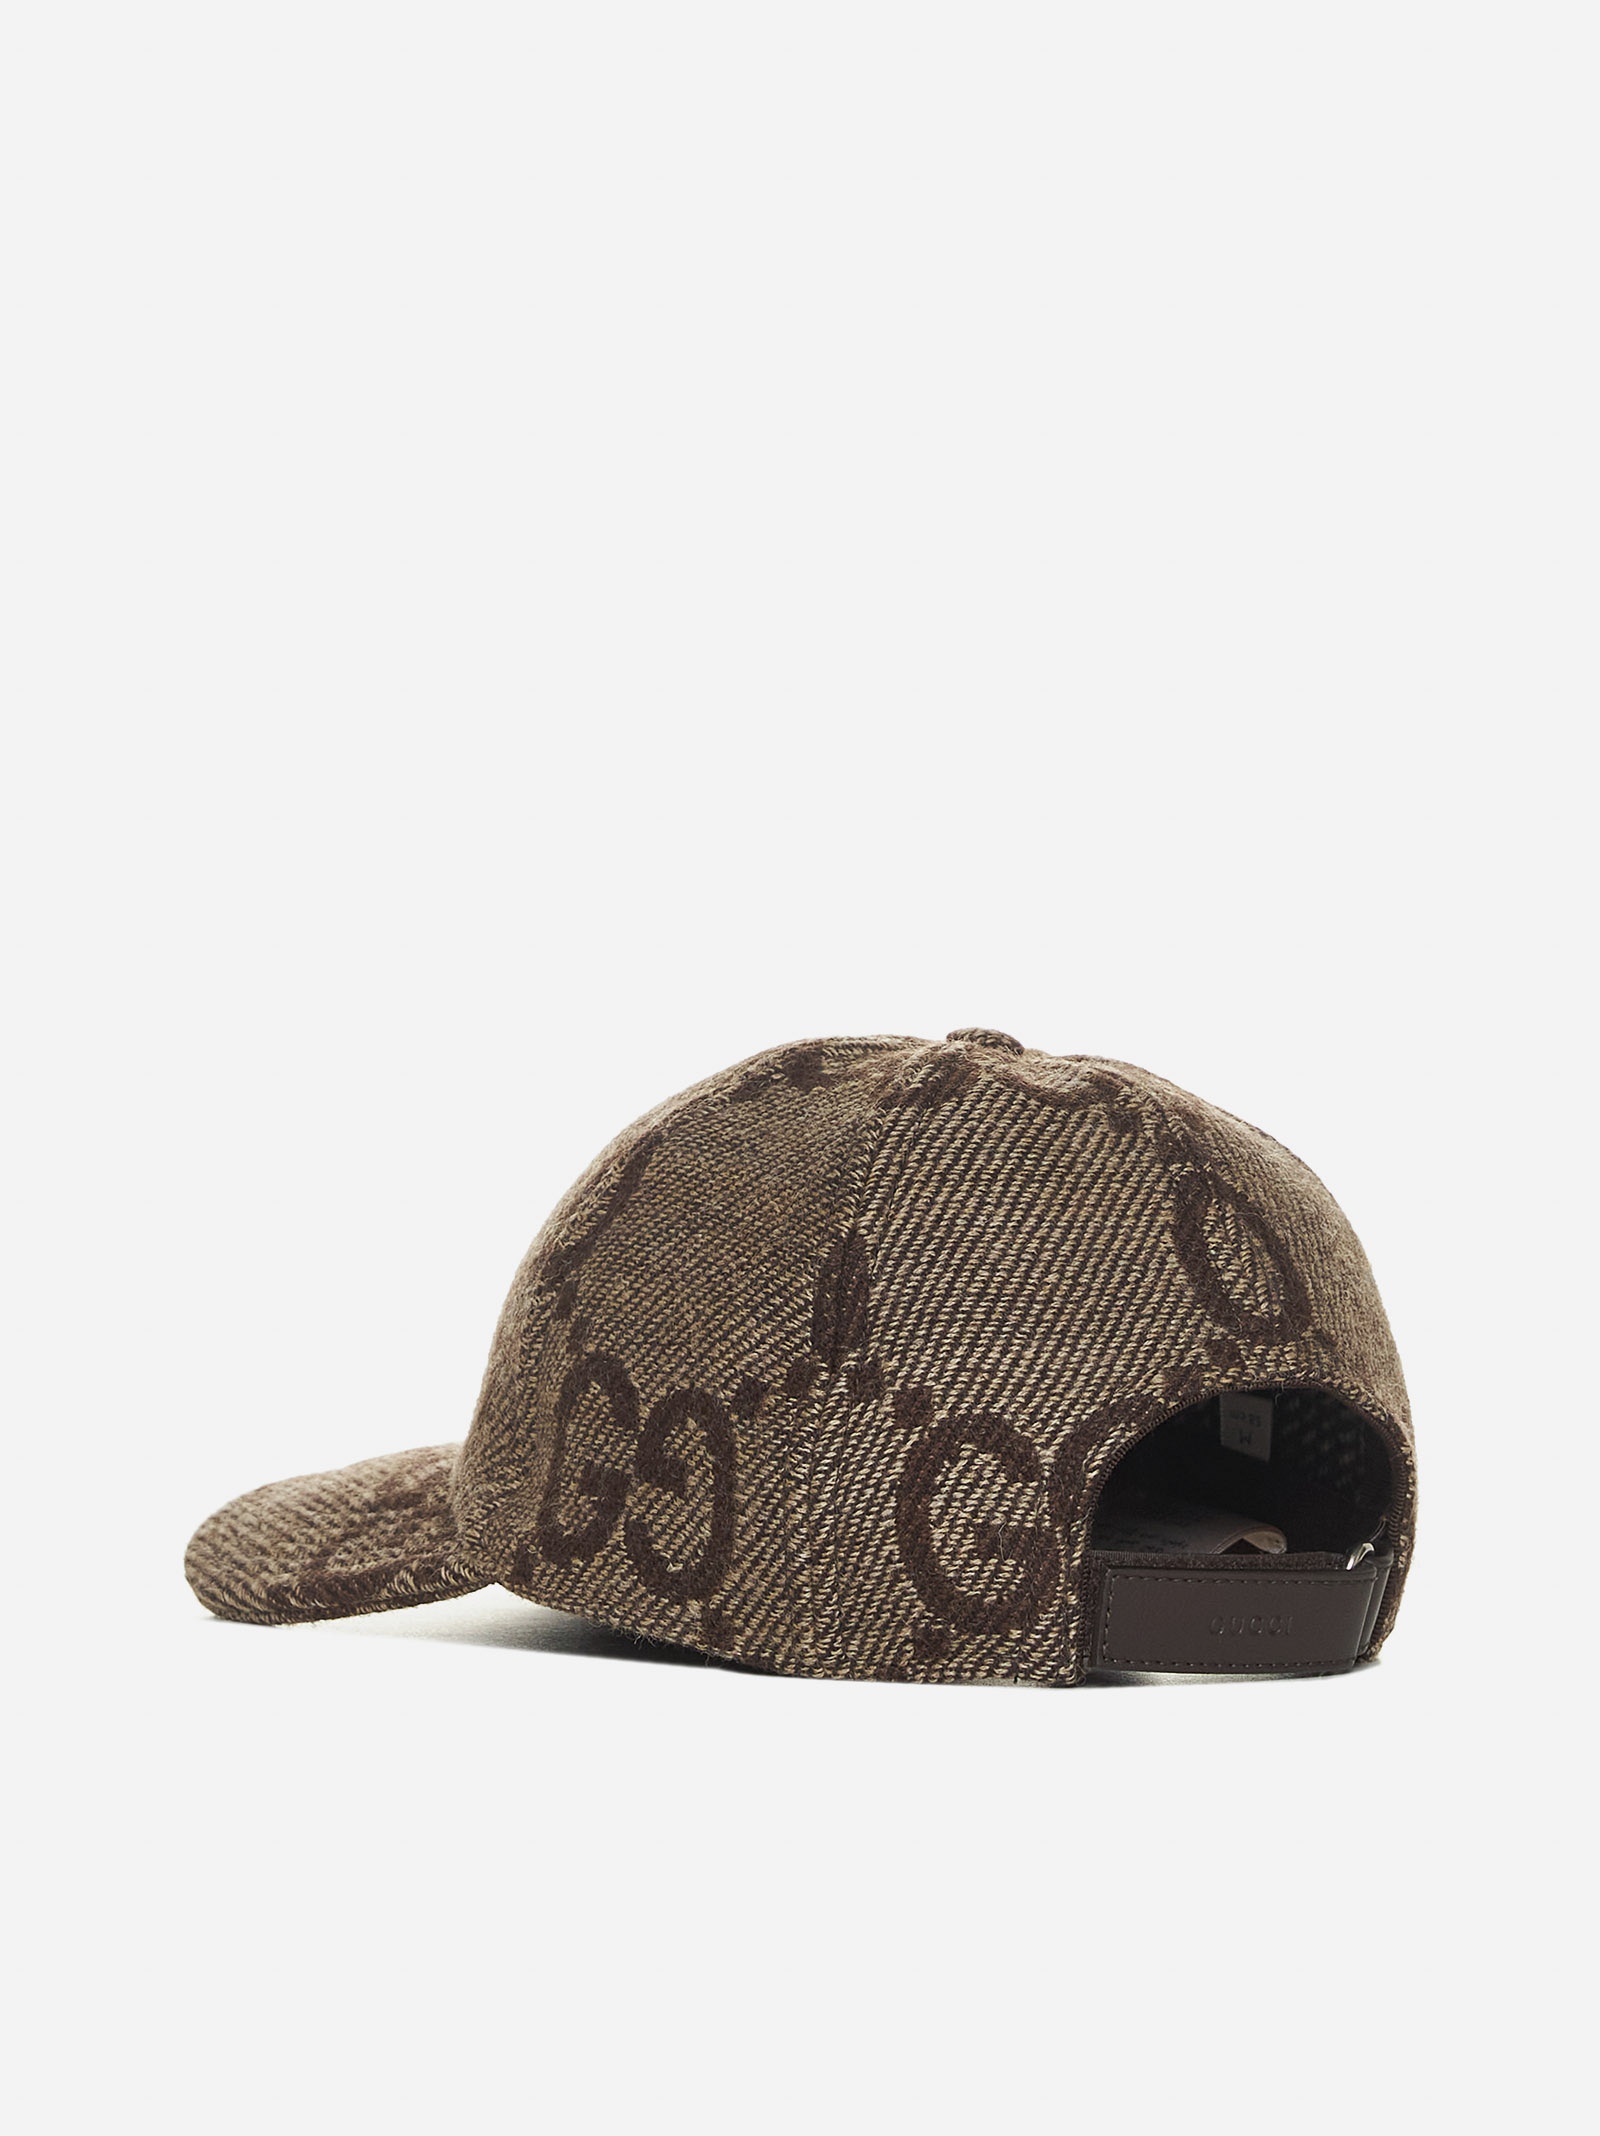 GG wool baseball cap - 3